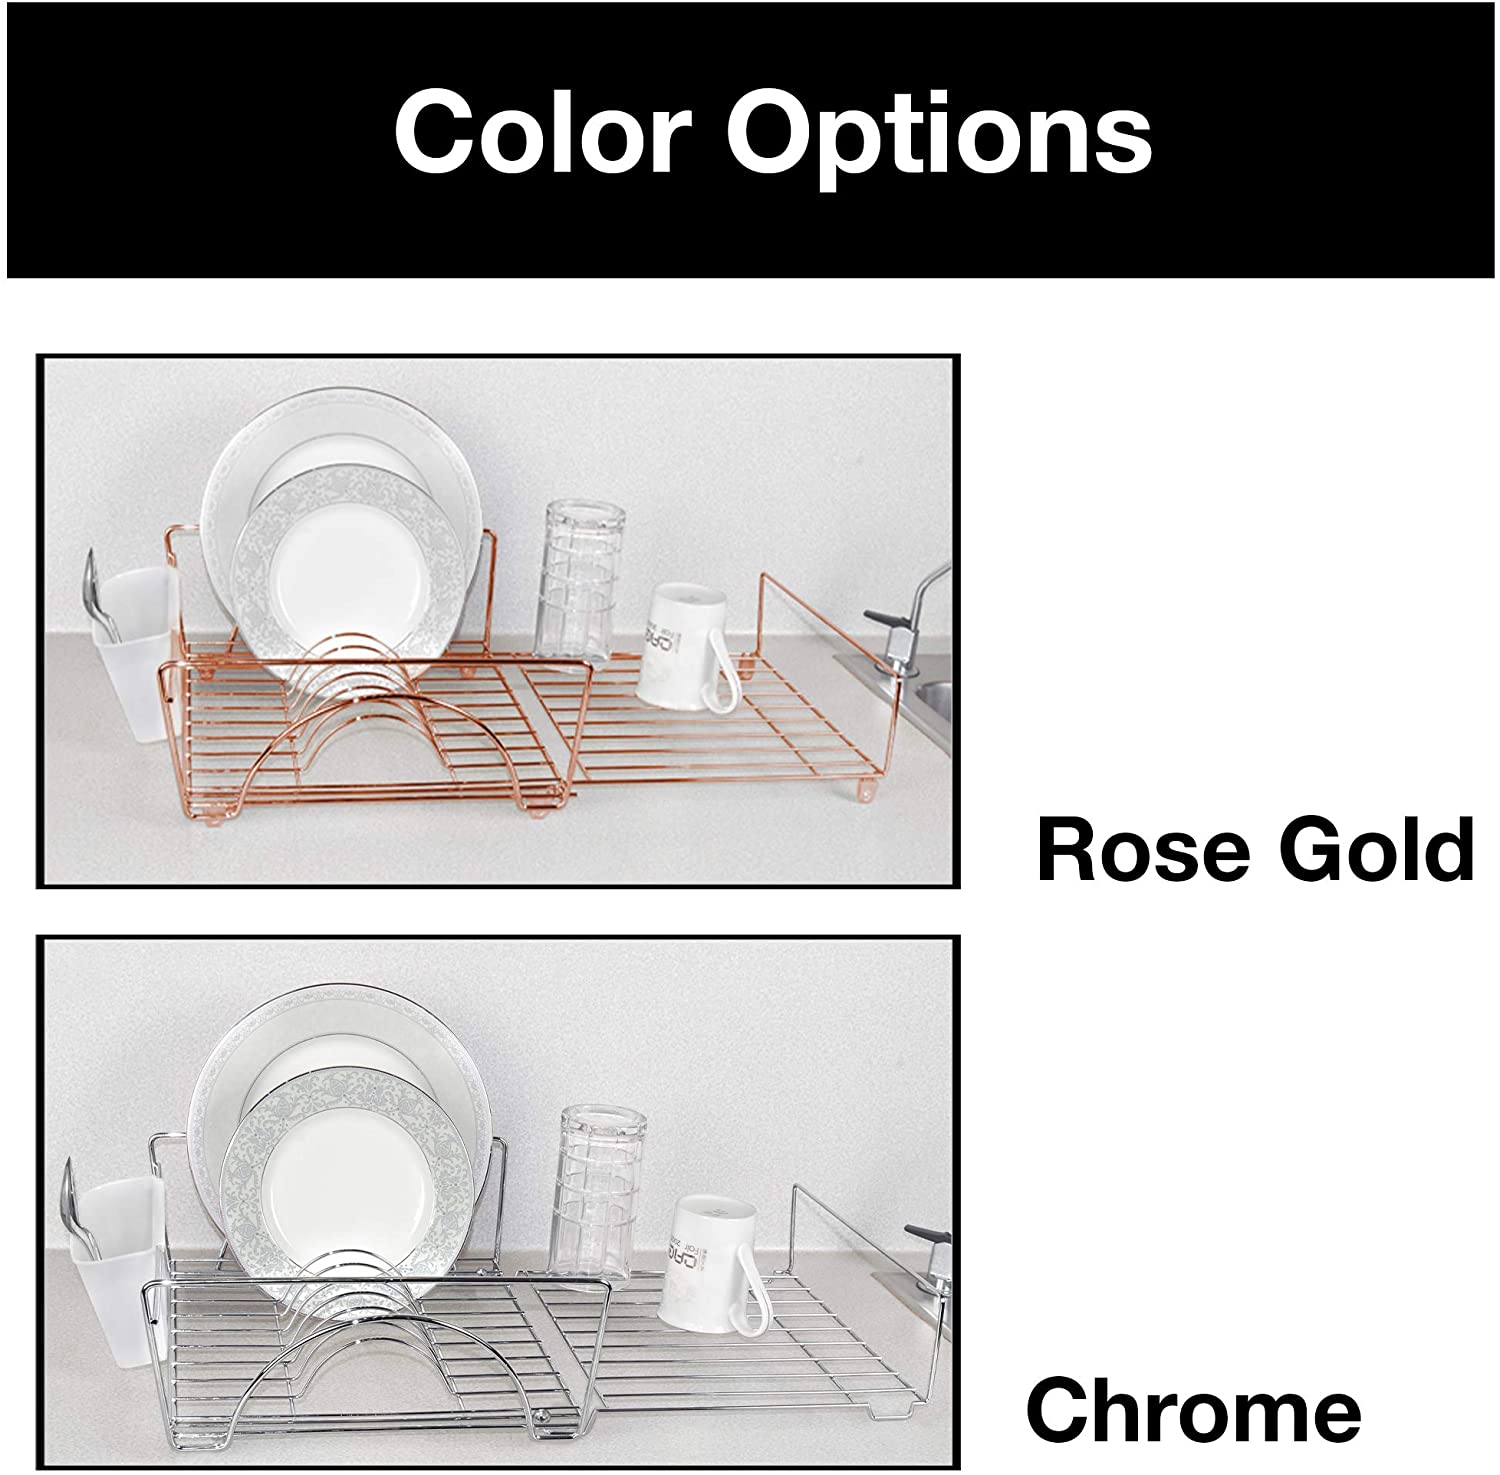 SmartDesign Smart Design Chrome Folding Dish Rack